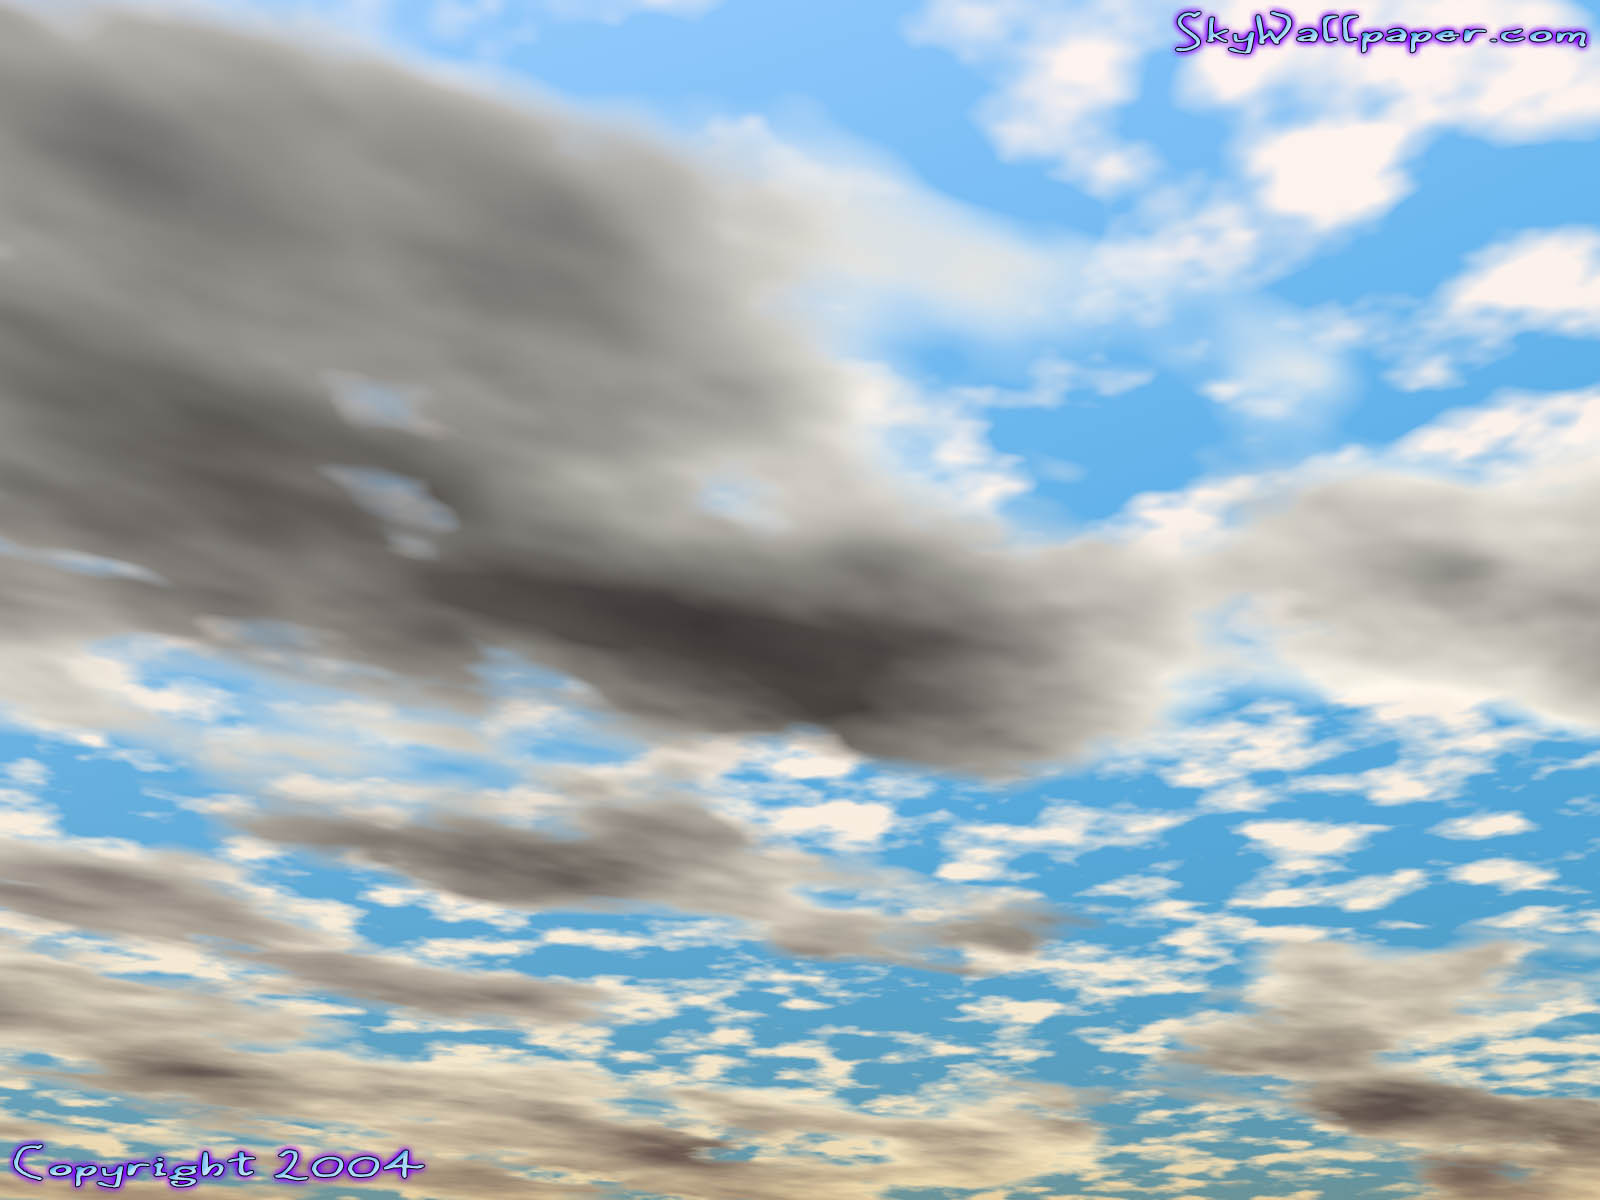 "Digital Sky Wallpaper Image" - Wallpaper No. 58 of 109. Right click for saving options.